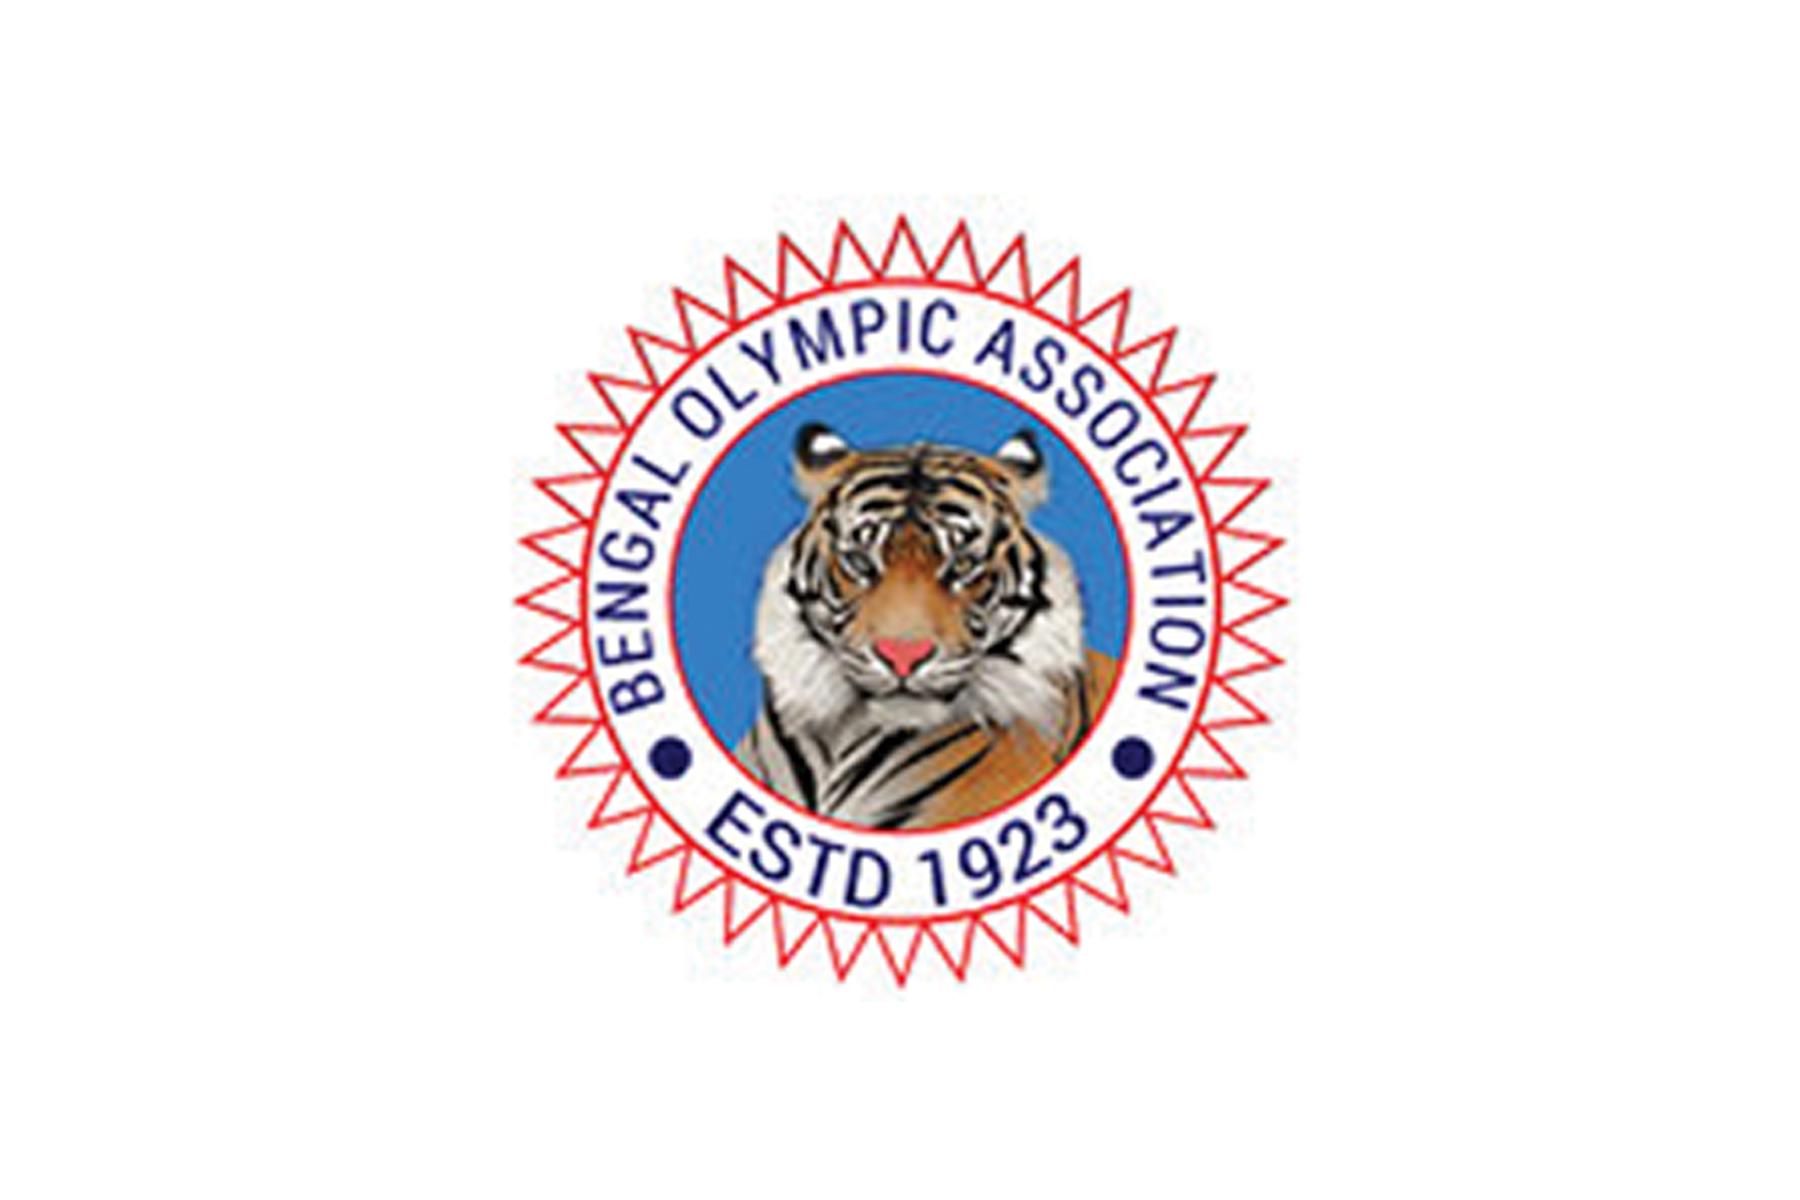 Bengal Olympic Association